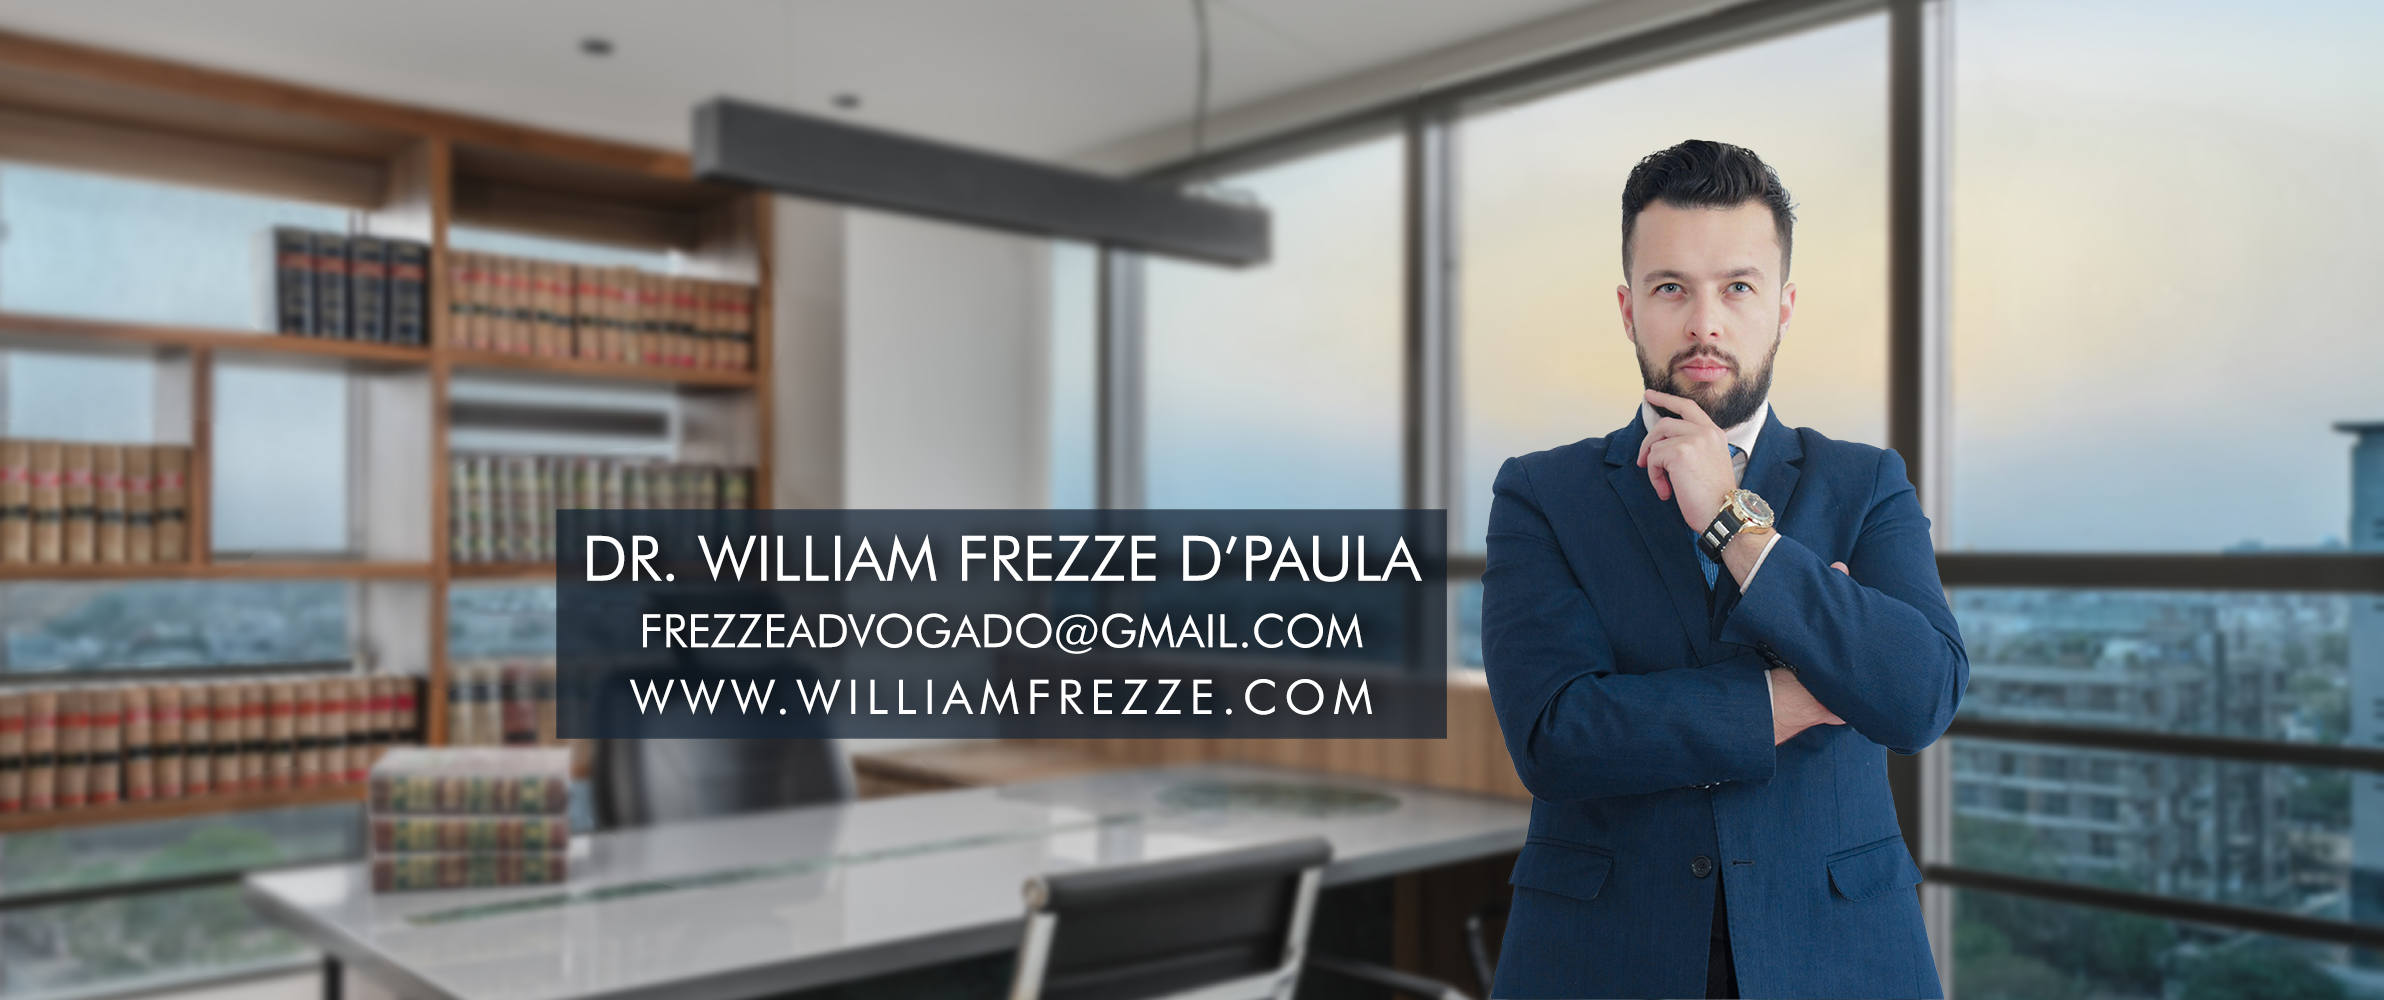 William Frezze|Advogado Logo